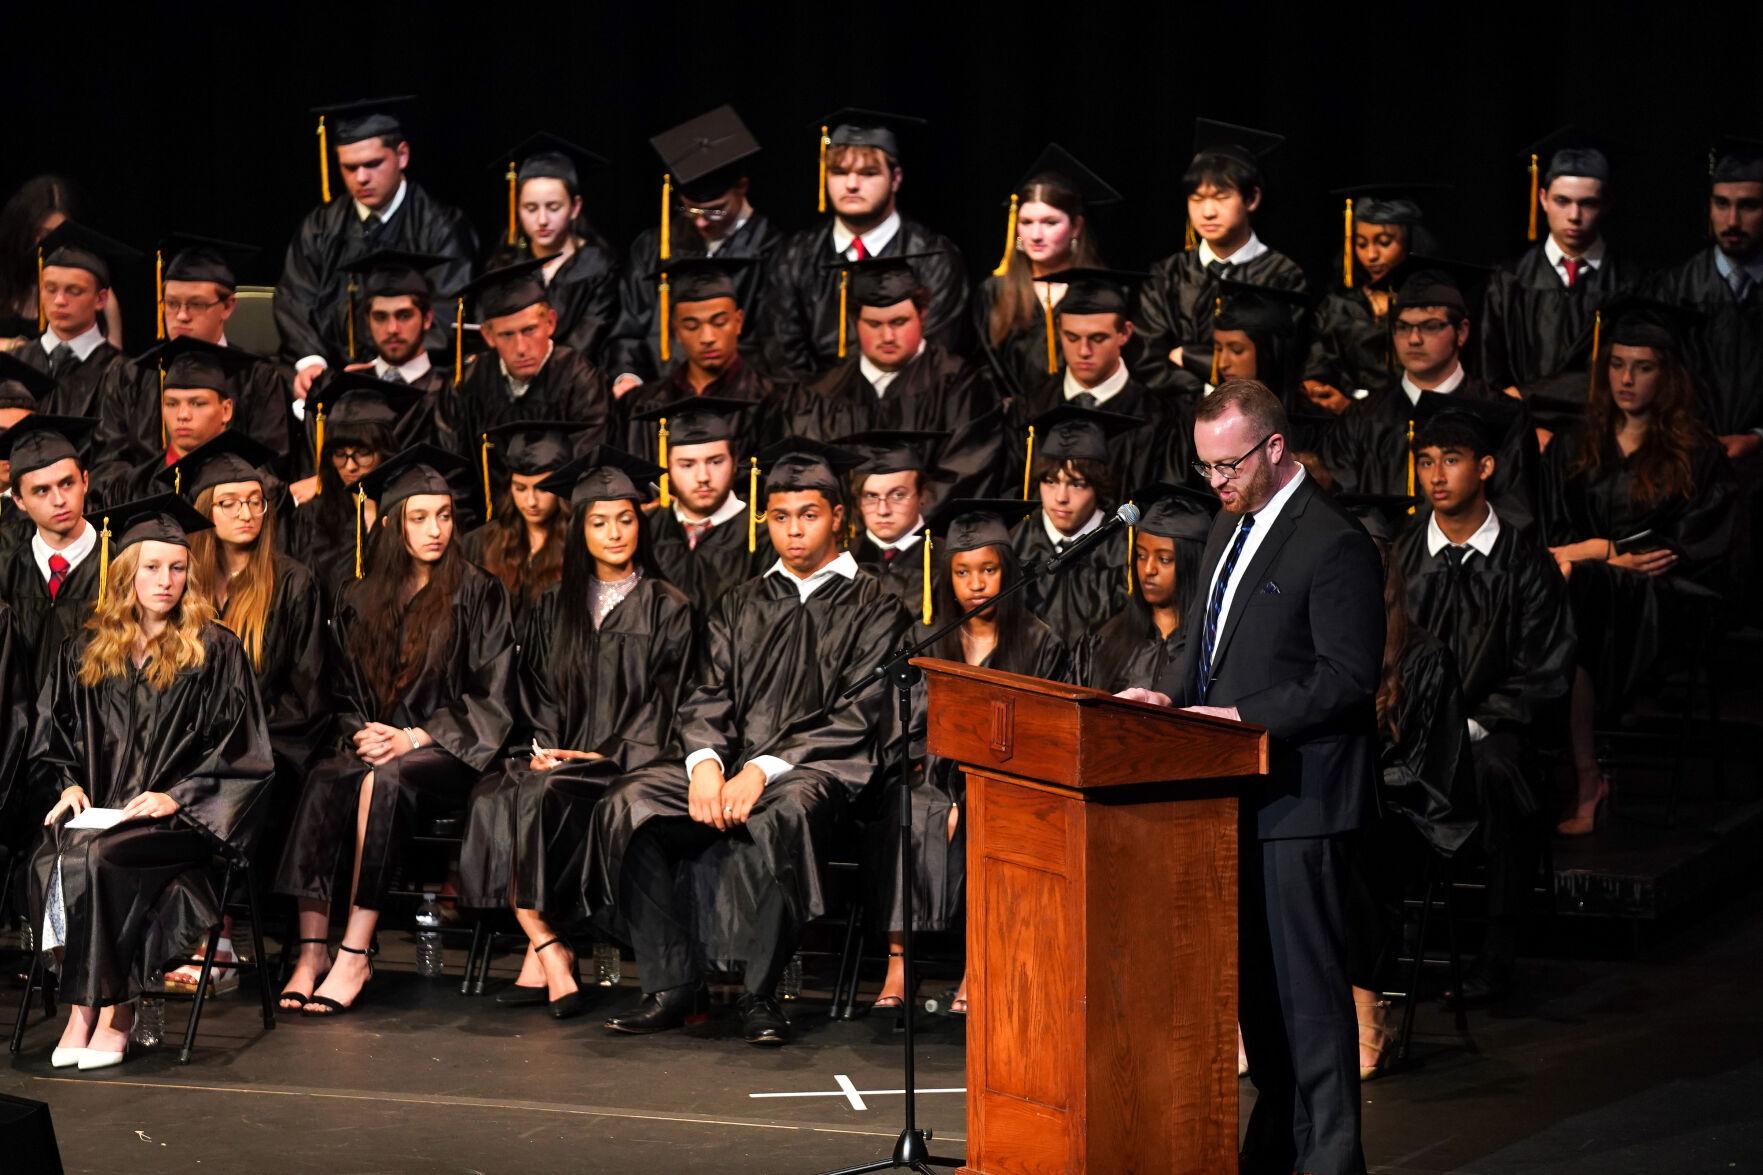 Conestoga Valley salutes Class of 2022 at graduation [photos] Local